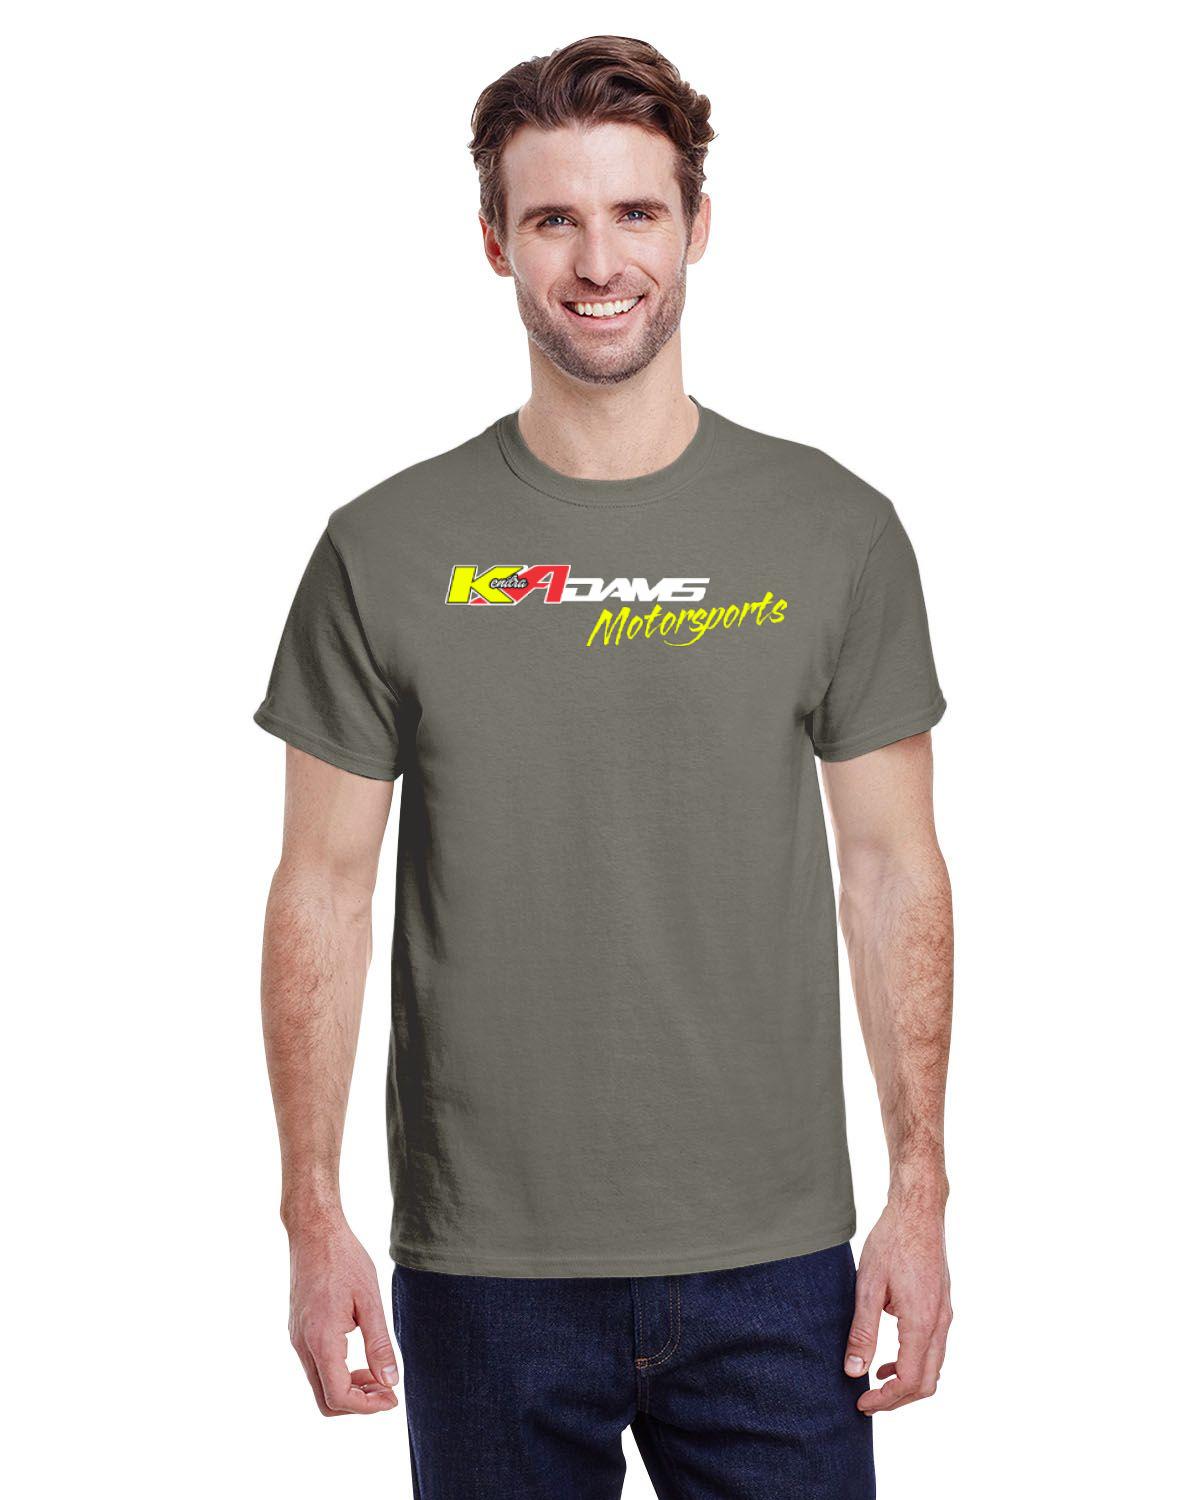 Kendra Adams Motorsports Men's Tshirt